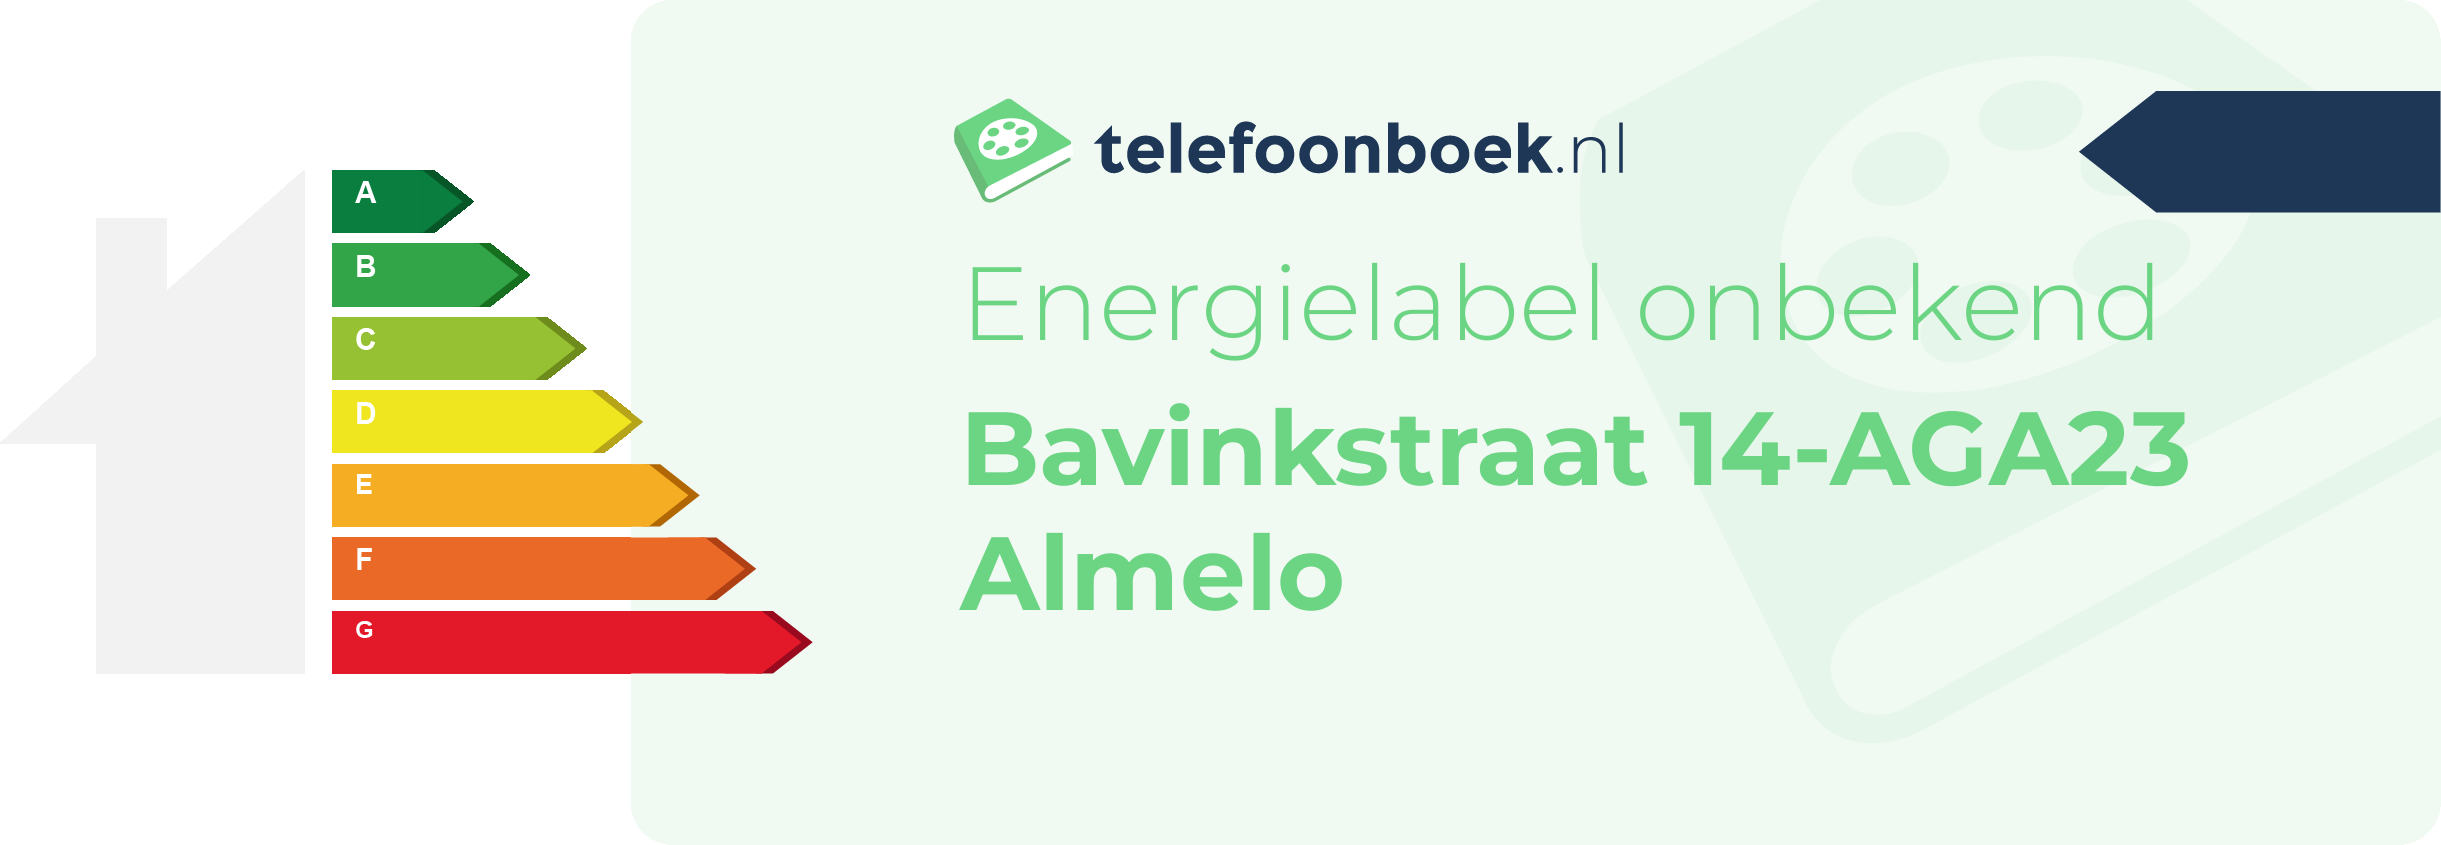 Energielabel Bavinkstraat 14-AGA23 Almelo